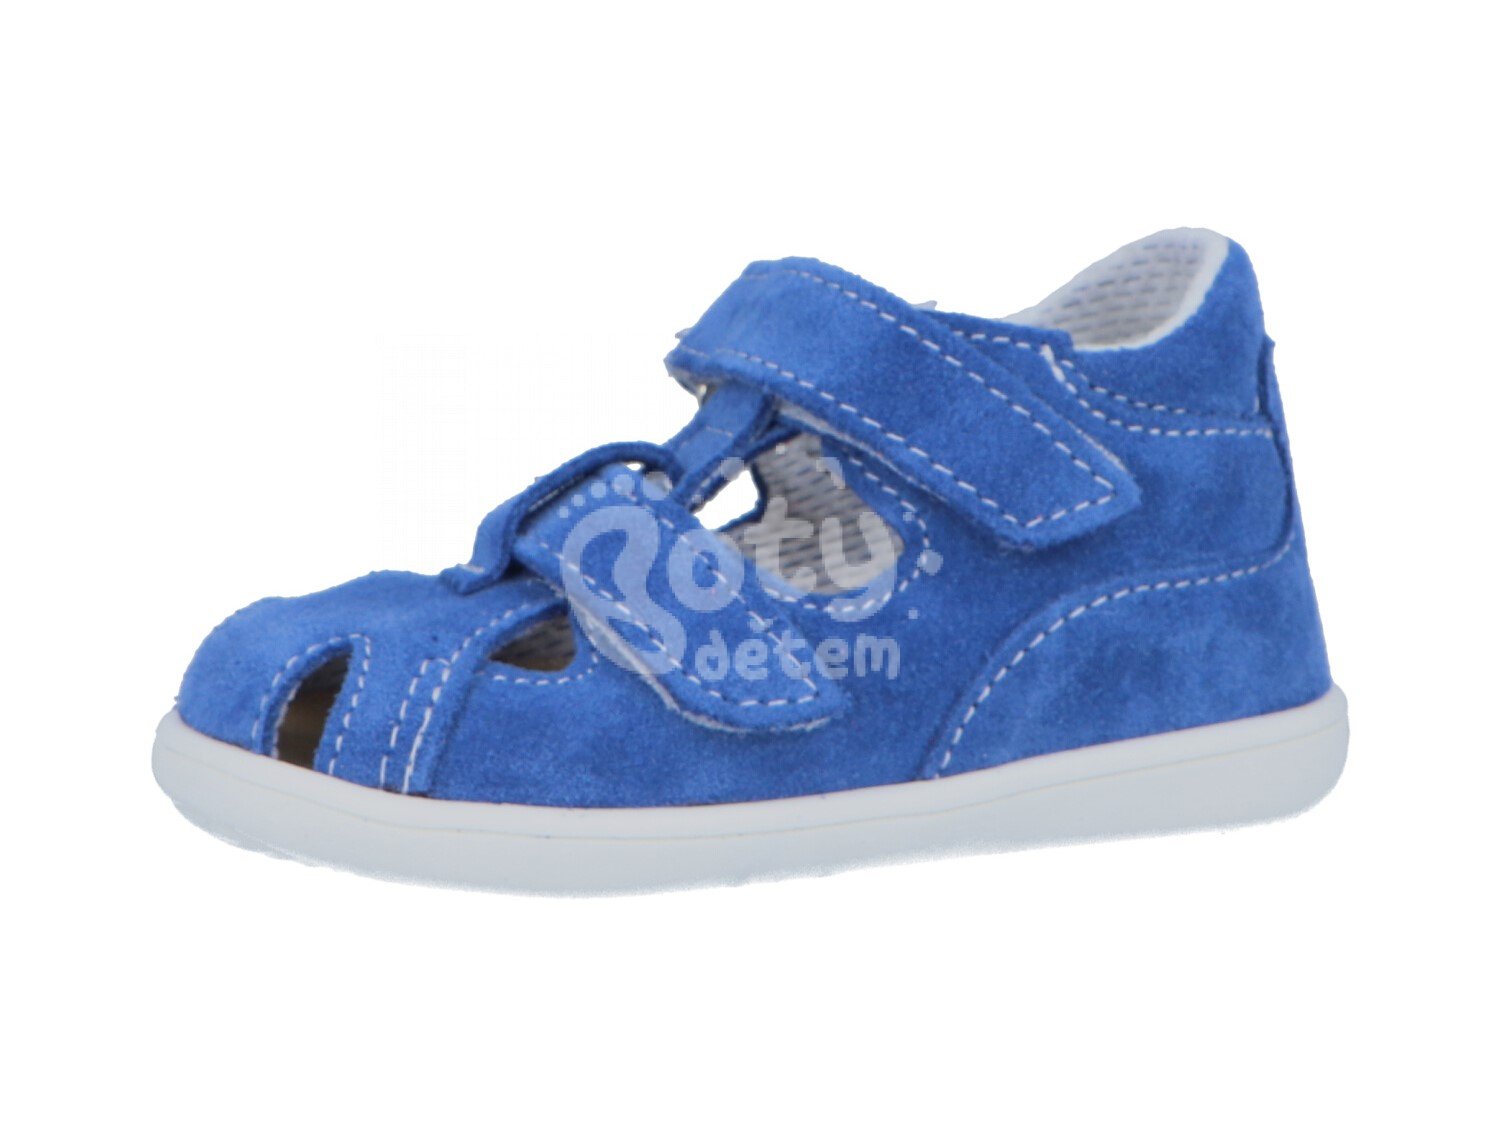 Jonap kožené sandálky 041 S modrá